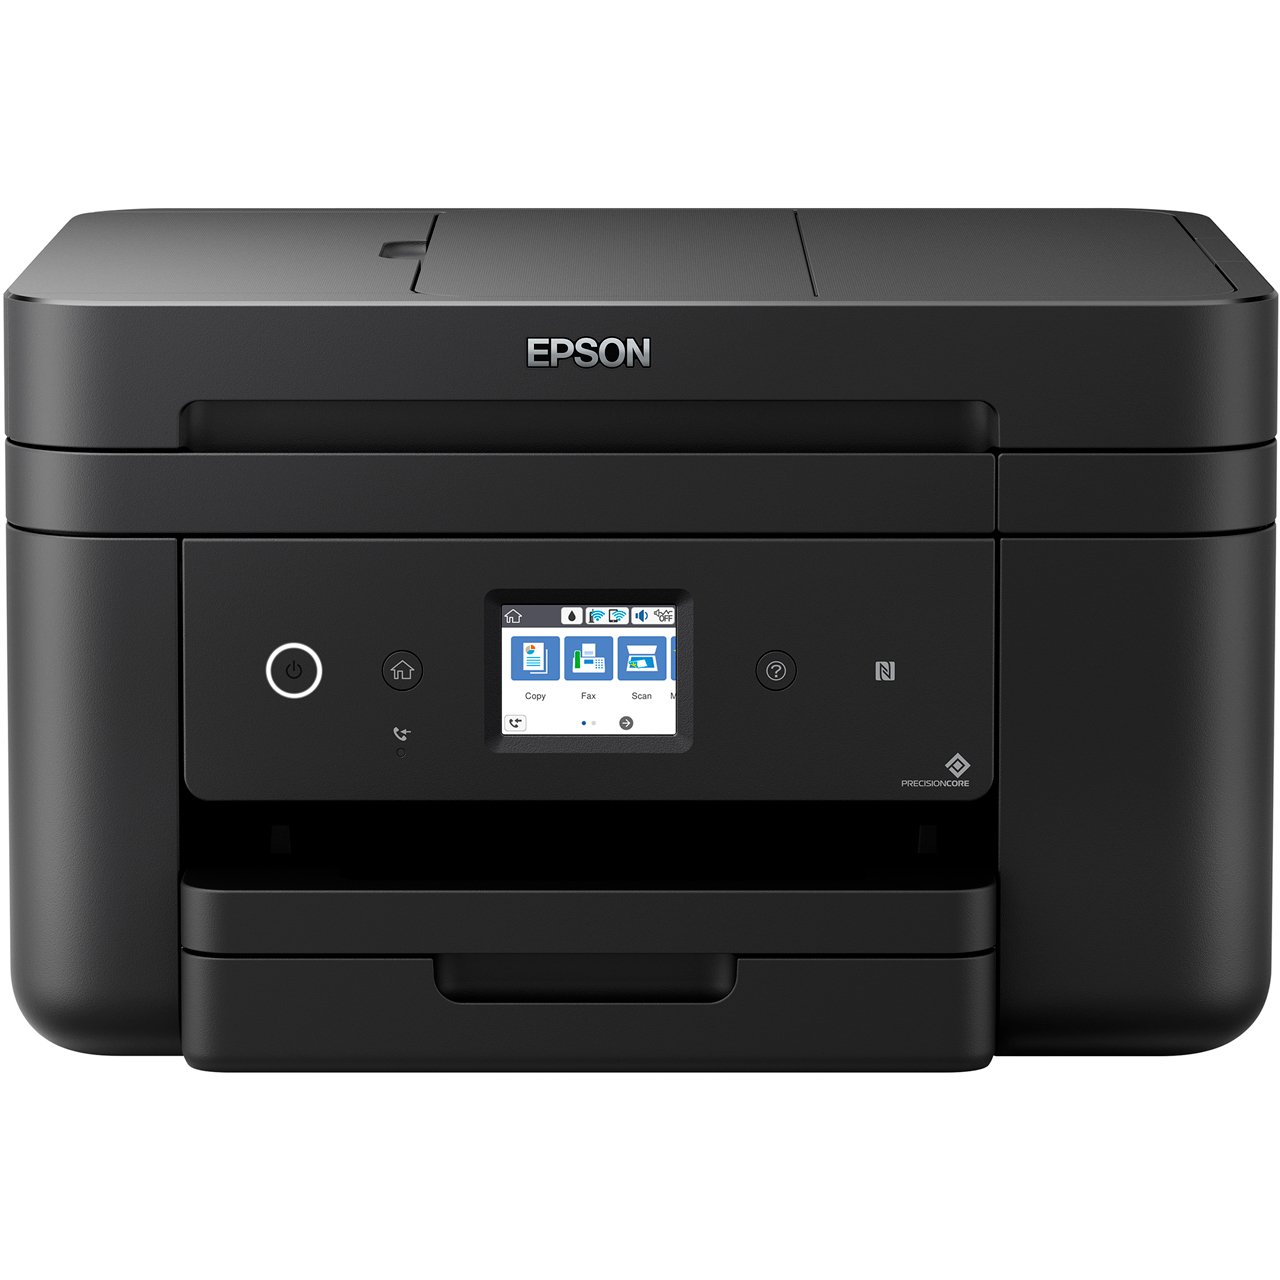  Epson  Workforce WF 2865DWF Compact  Inkjet Printer  Black 